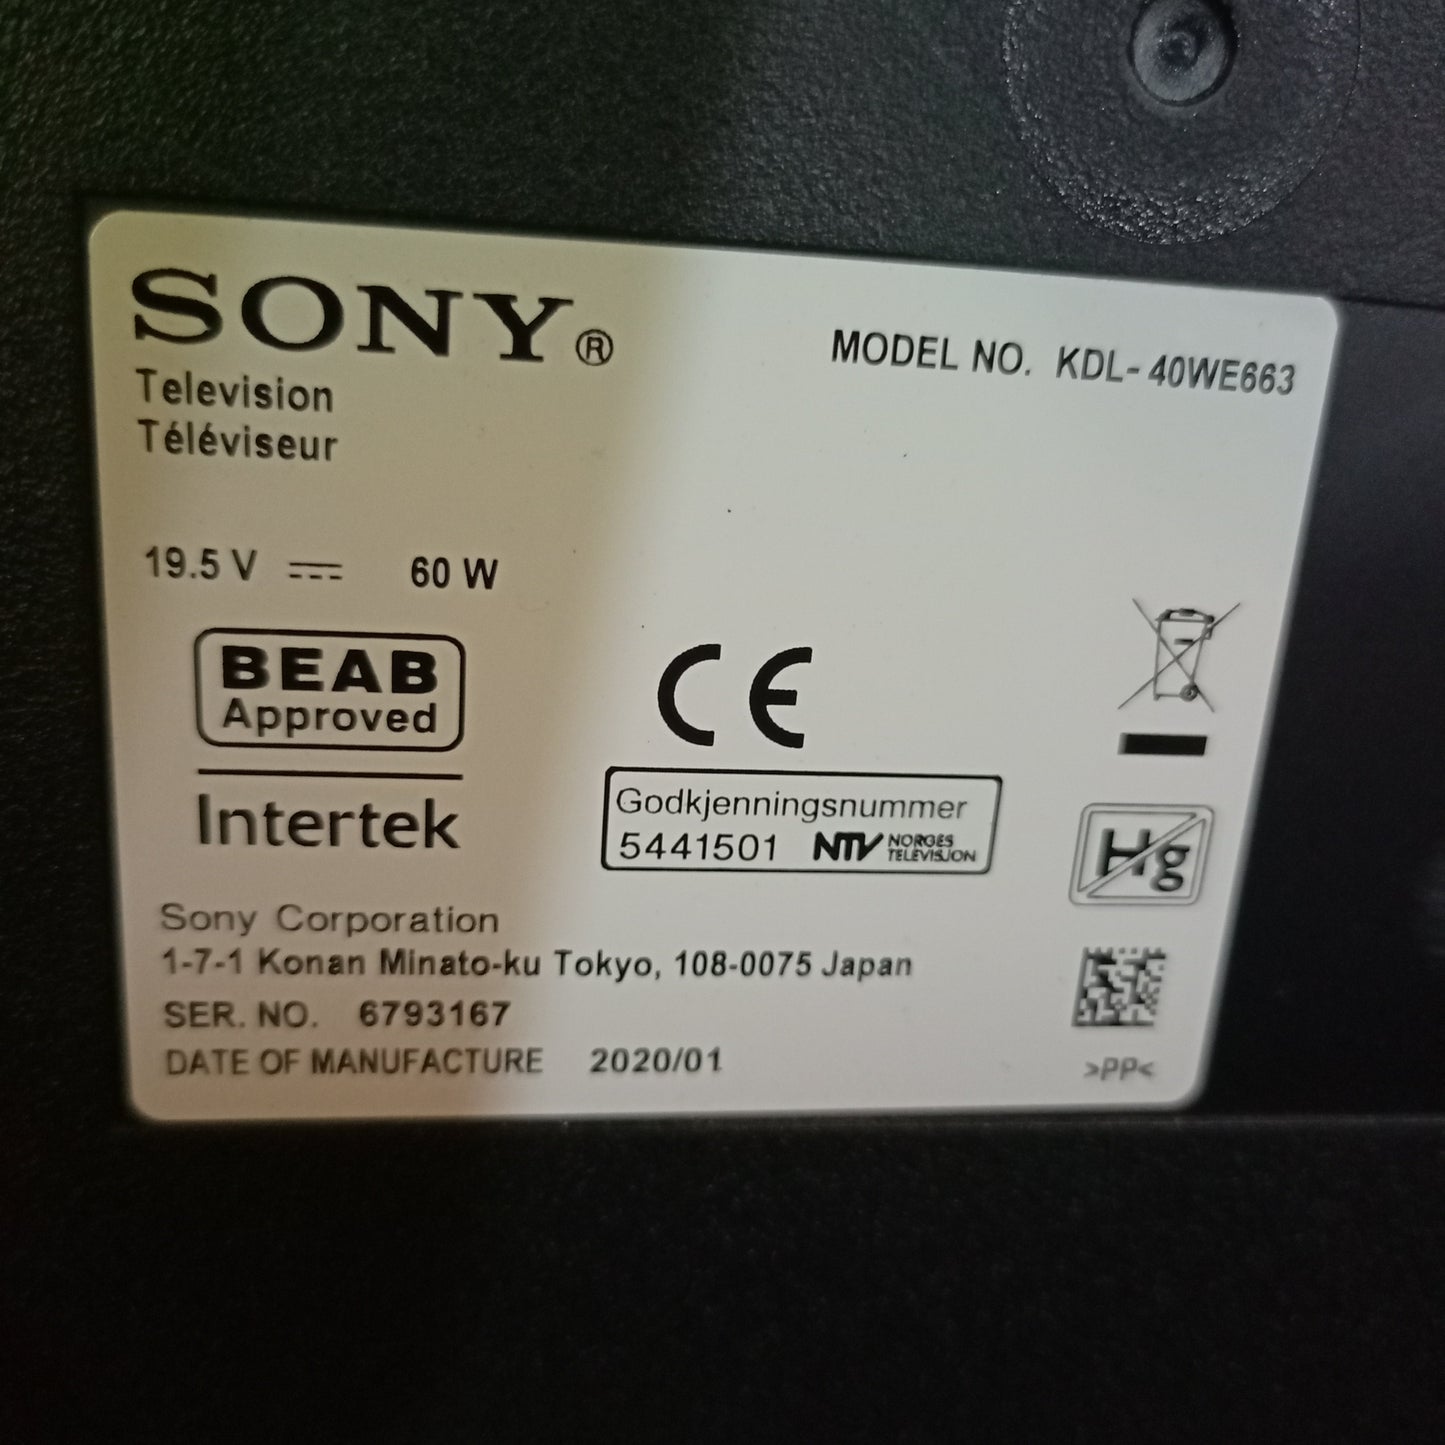 Sony BRAVIA 40 Inch KD-40WE663 Smart Full HD LED TV + Netflix, YouTube - Model number sticker